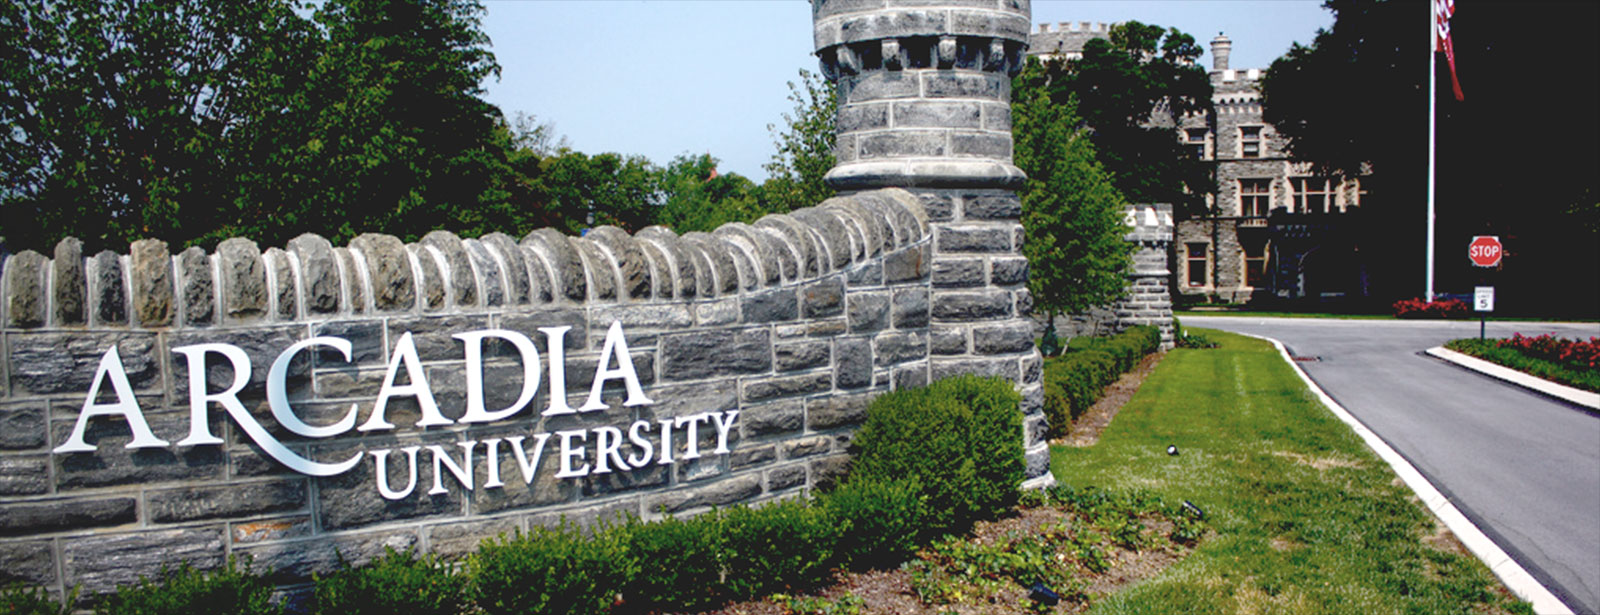 Arcadia University in Glenside, Pennsylvania | Panarcadian Federation